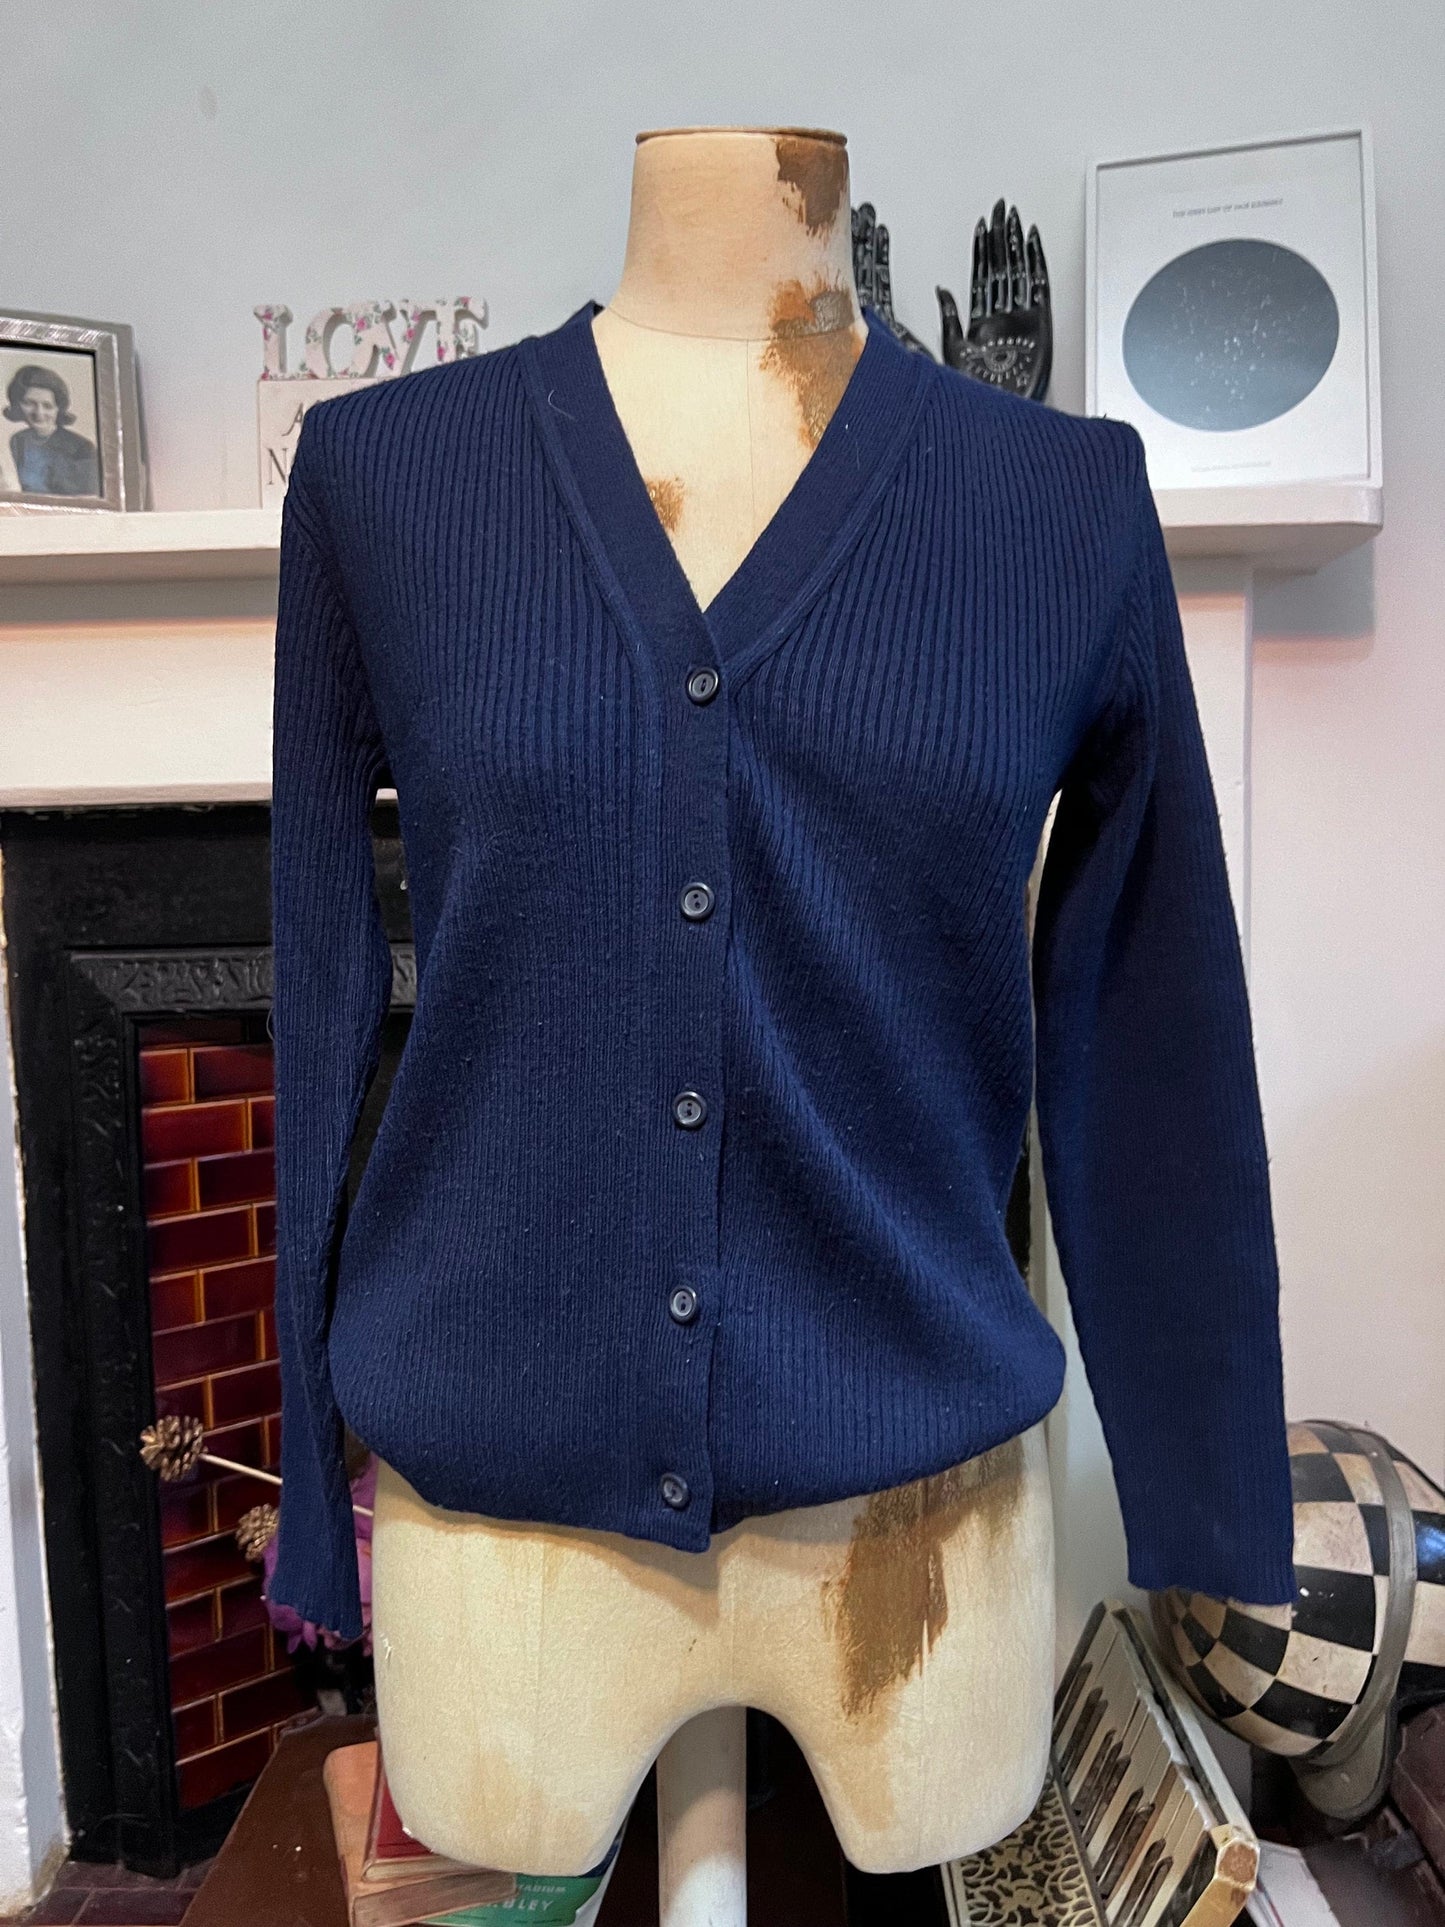 Vintage navy Cardigan acrylic cardigan navy blue knit cardigan, navy vintage, vintage knitwear, vintage jumper, 1950s cardigan St Michael M&